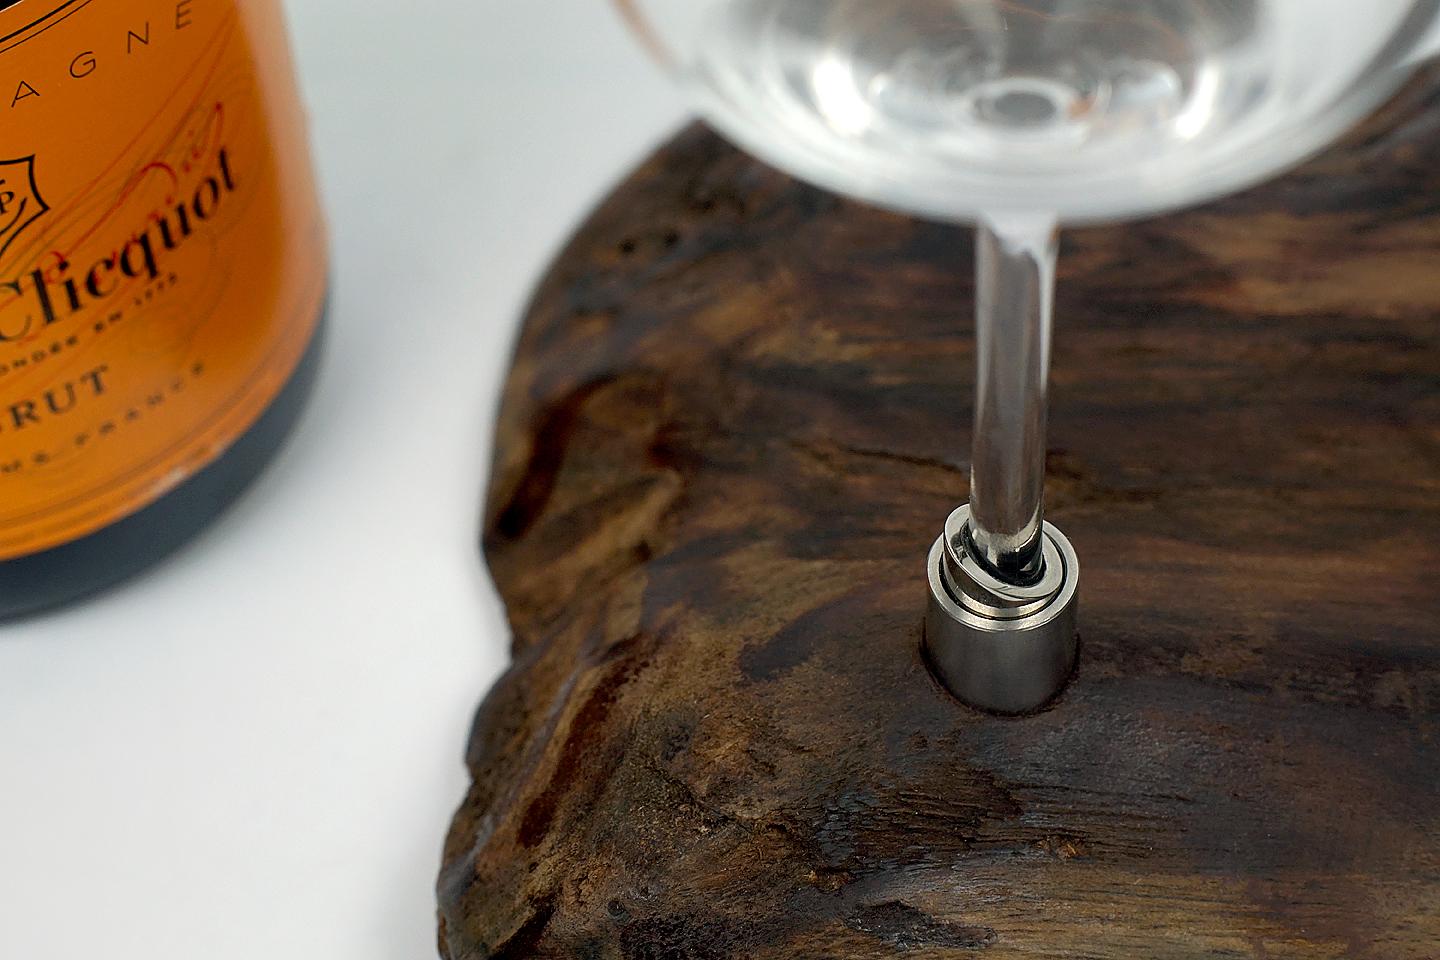 High quality glasses on sonokiling wood decorated with swarovski crystals.

Beautiful organic sonokiling wood plate with 2 white wine glasses an stunning swarovski crystal details.